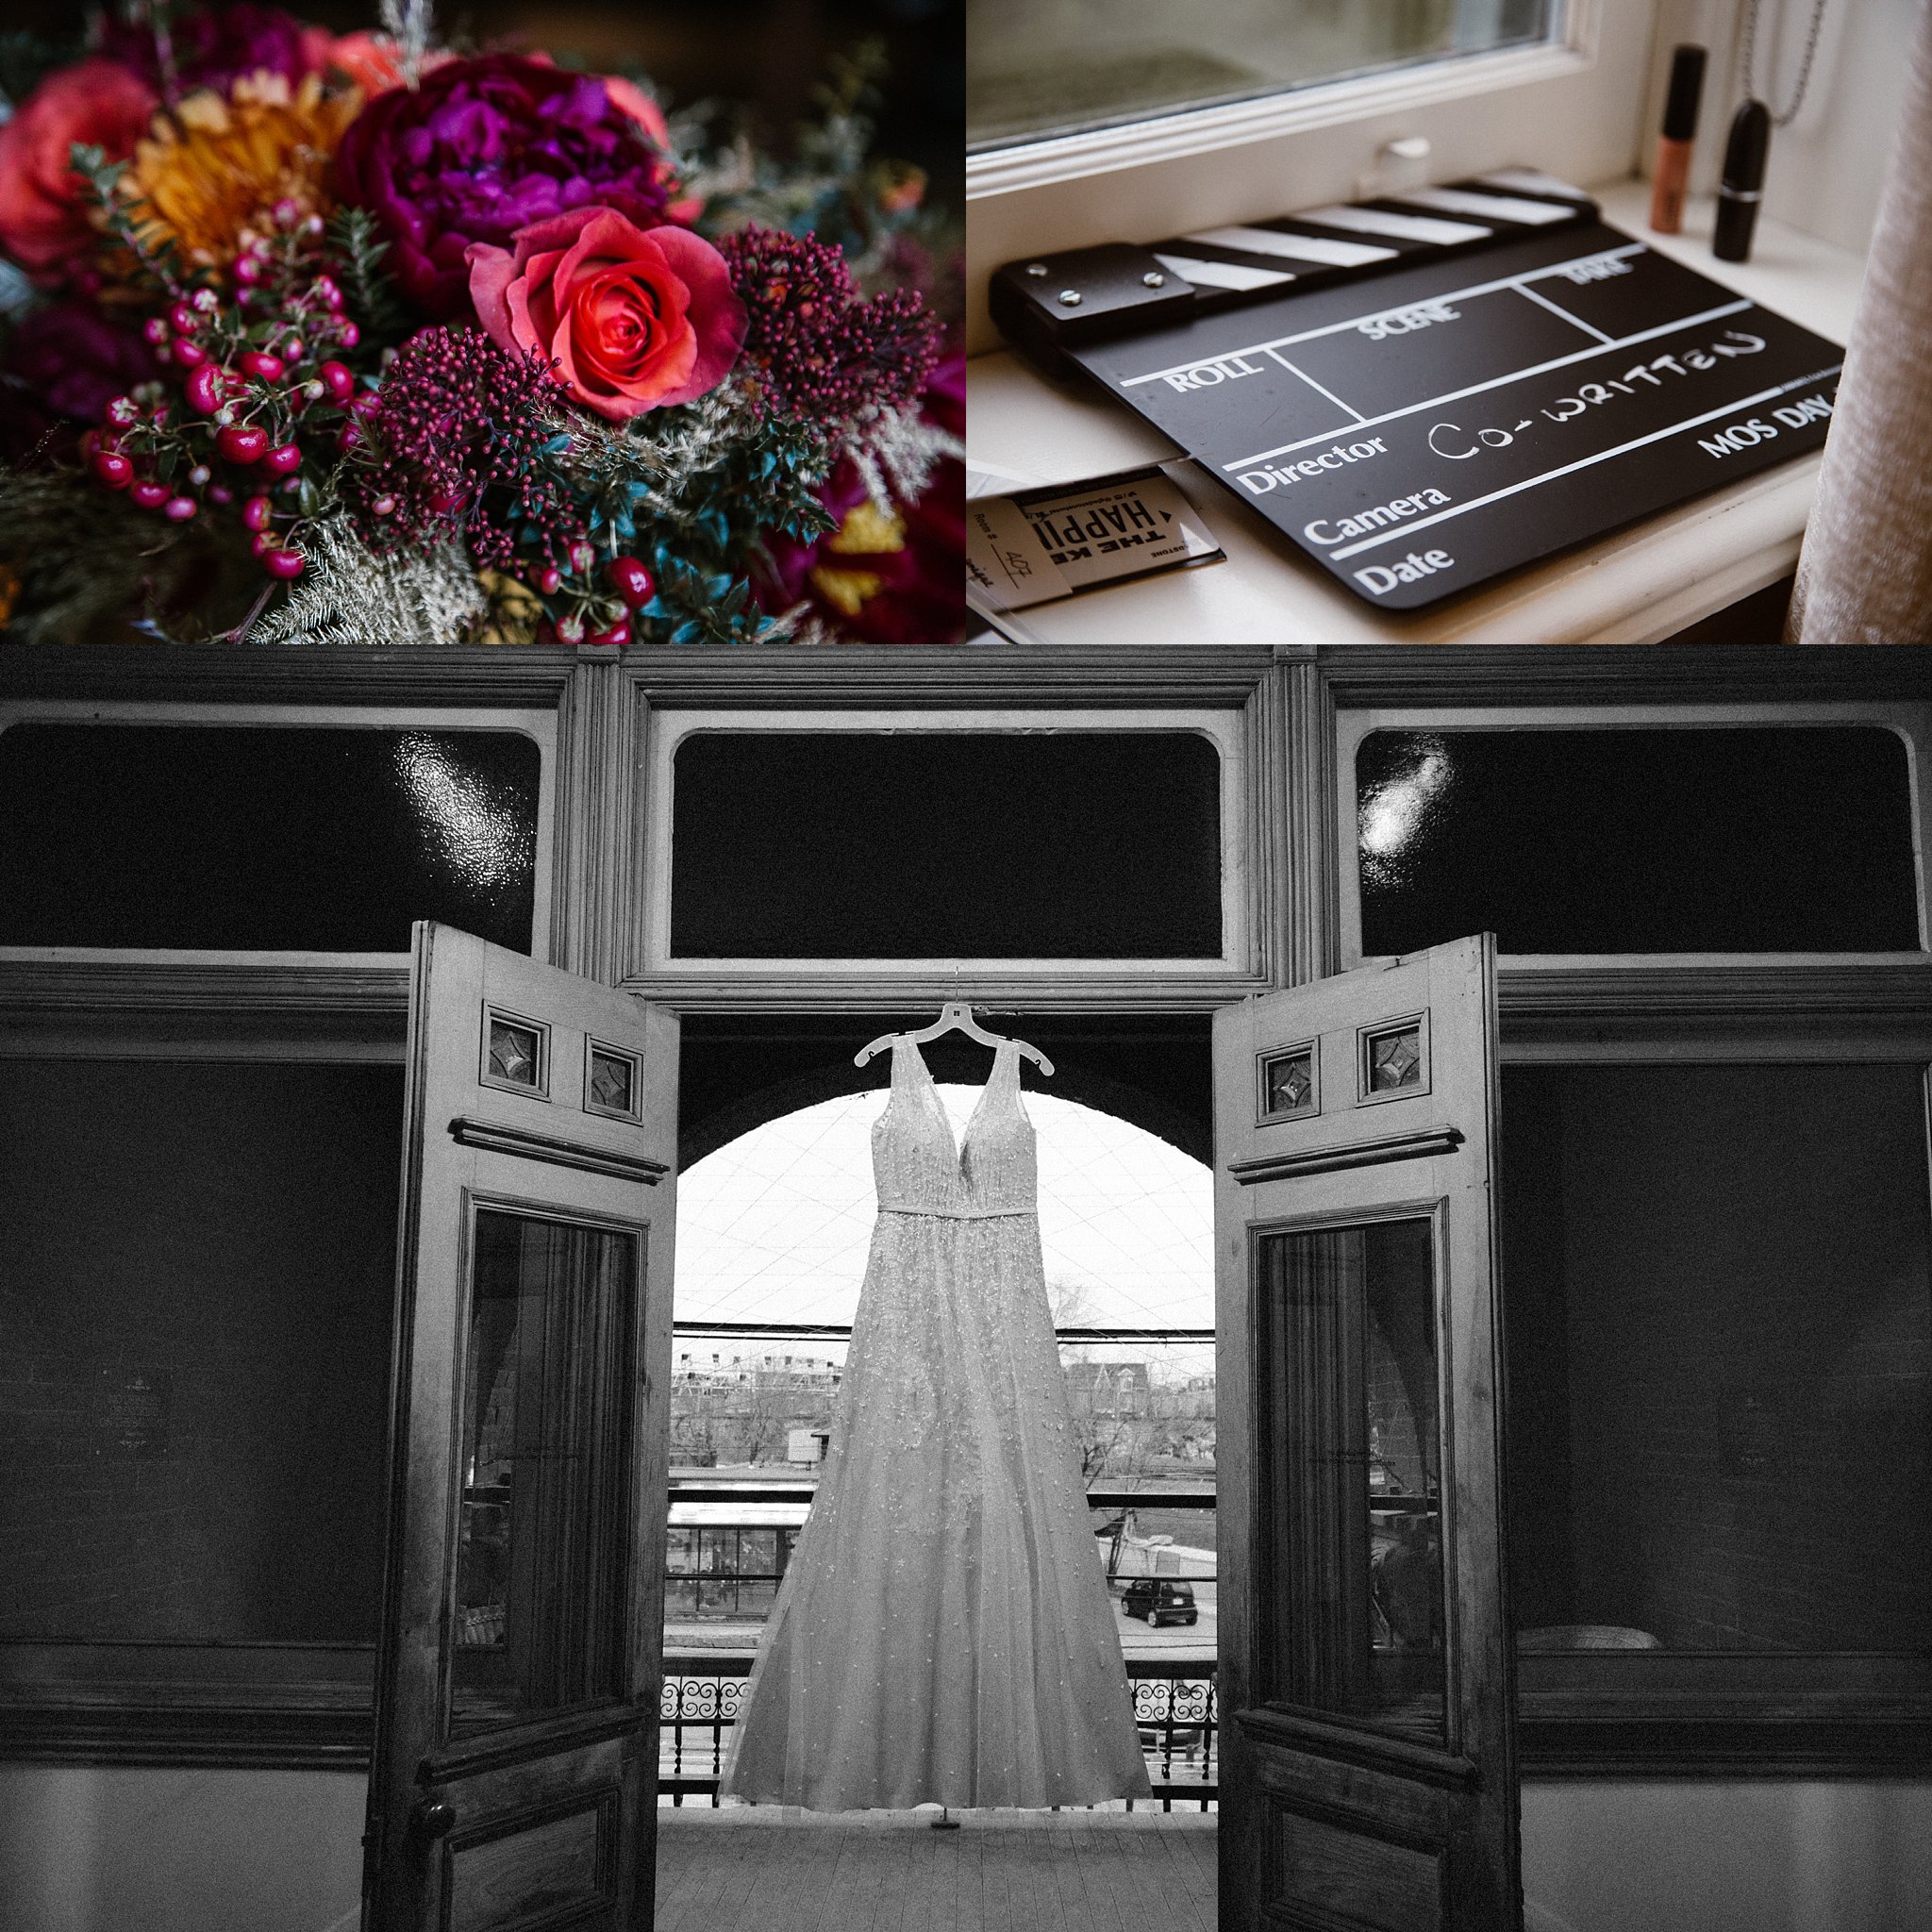 Jennifer Blaak Photography, Toronto Wedding Photographer, Gladstone Hotel Wedding, Wedding details, Clapboard, Bouquet, Wedding Dress